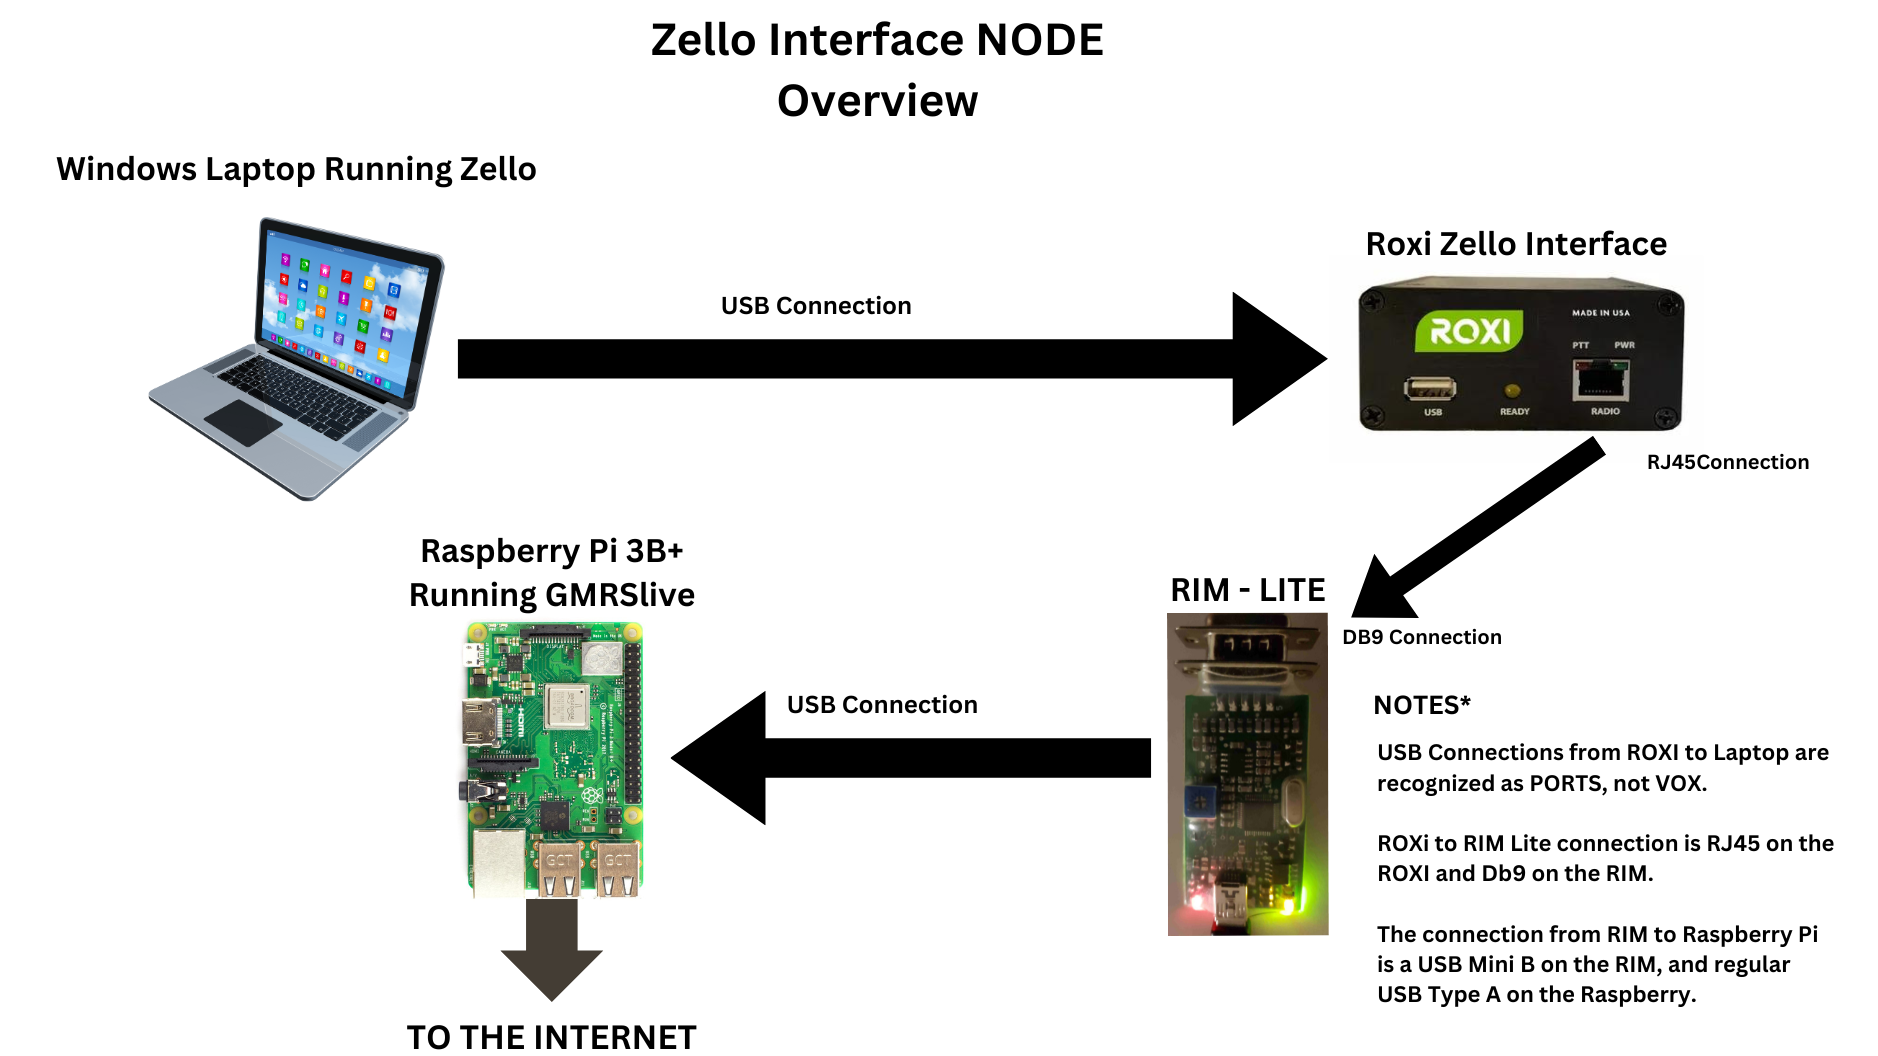 Zello Overview